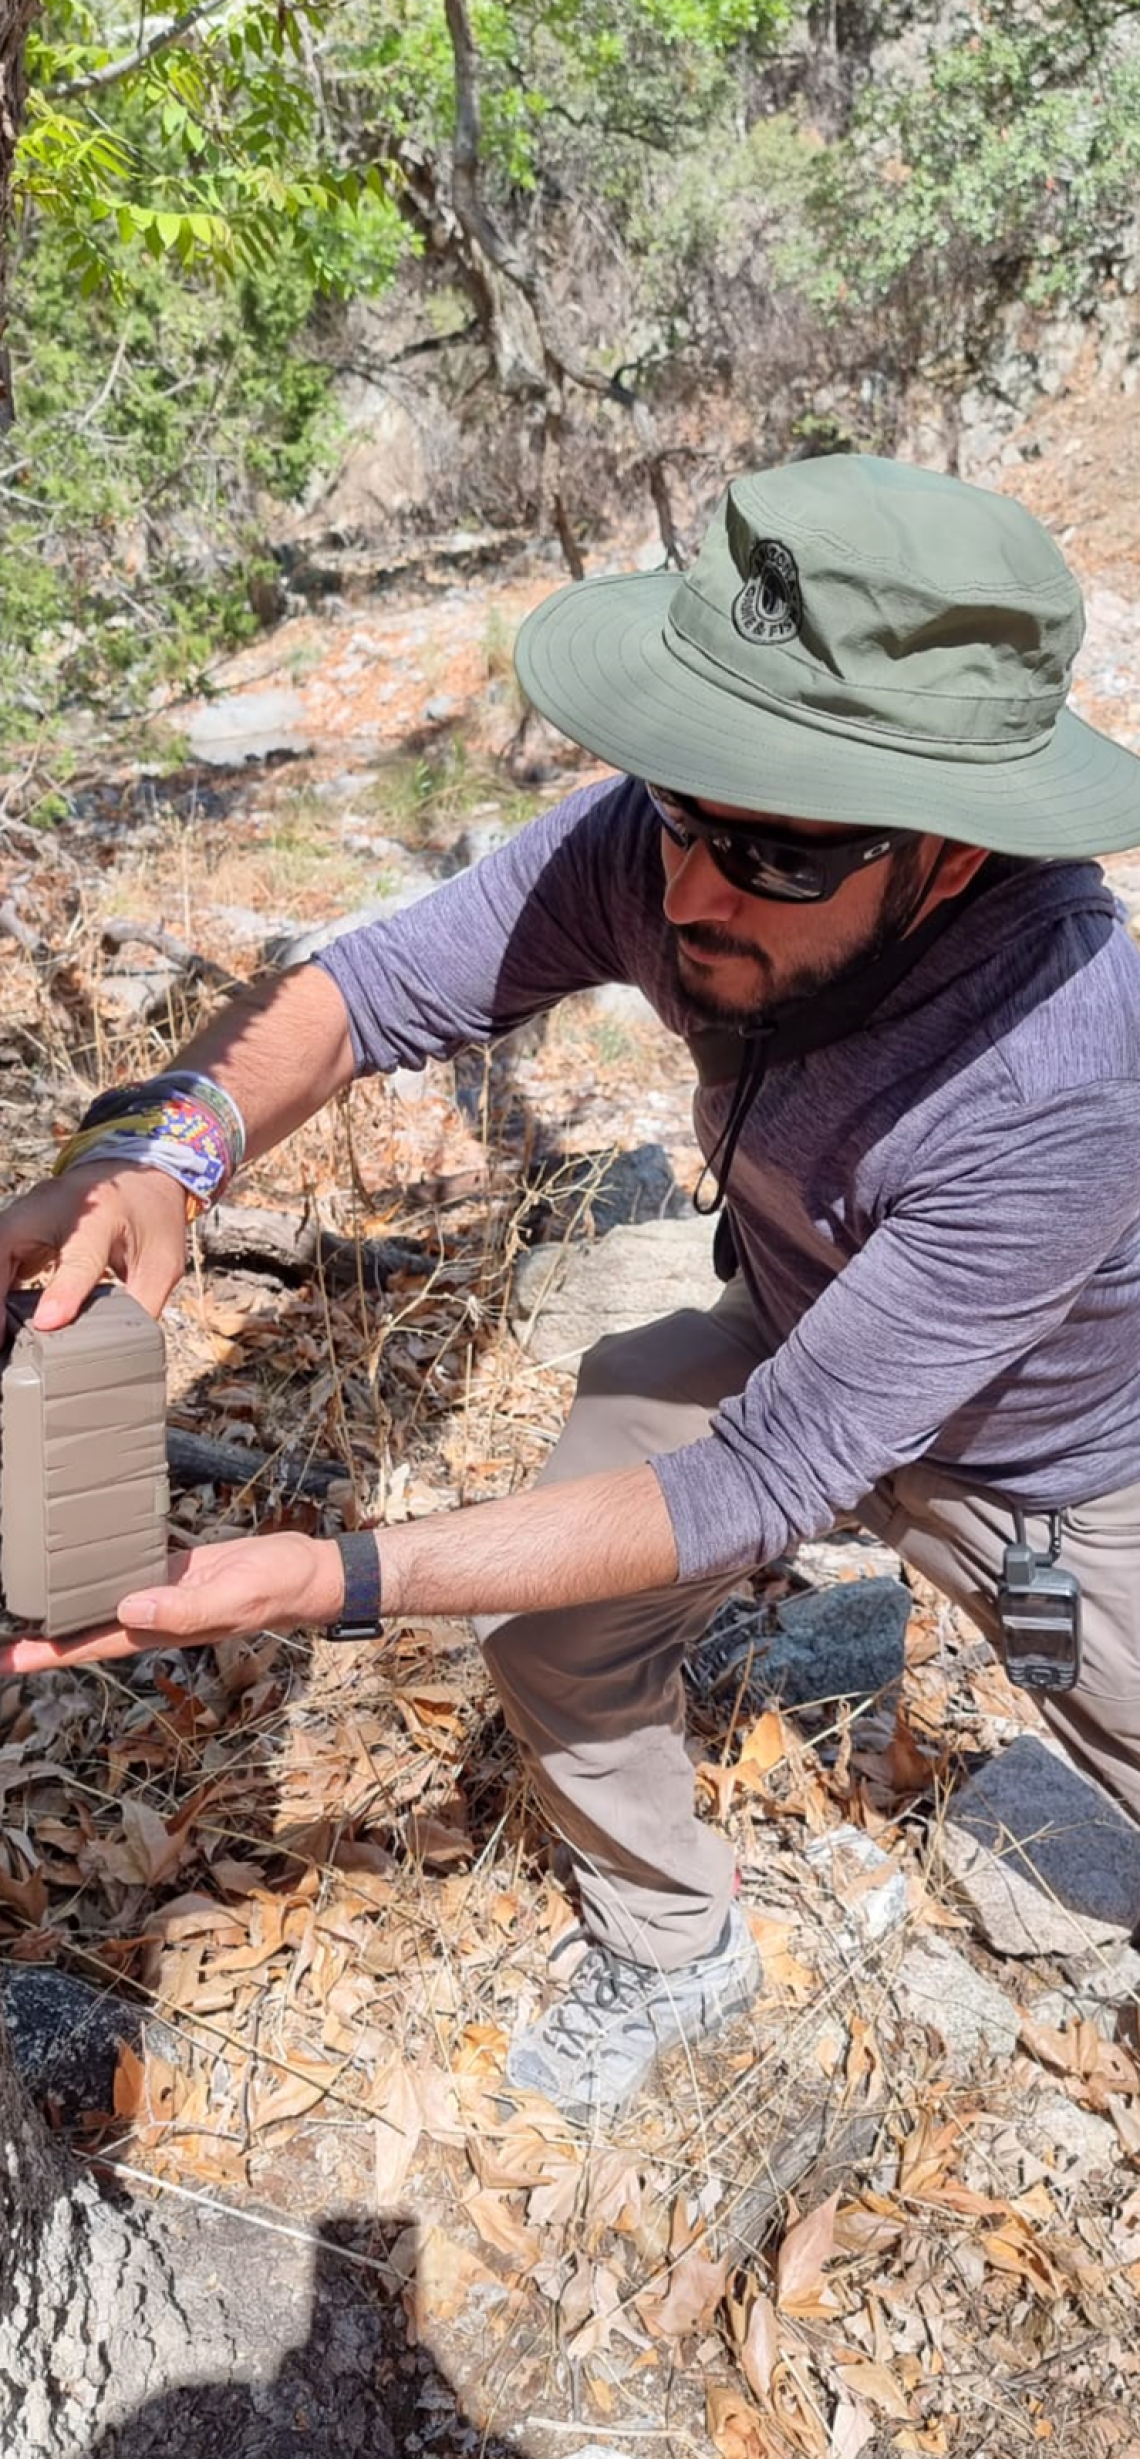 Miguel Grageda setting up wildlife camera